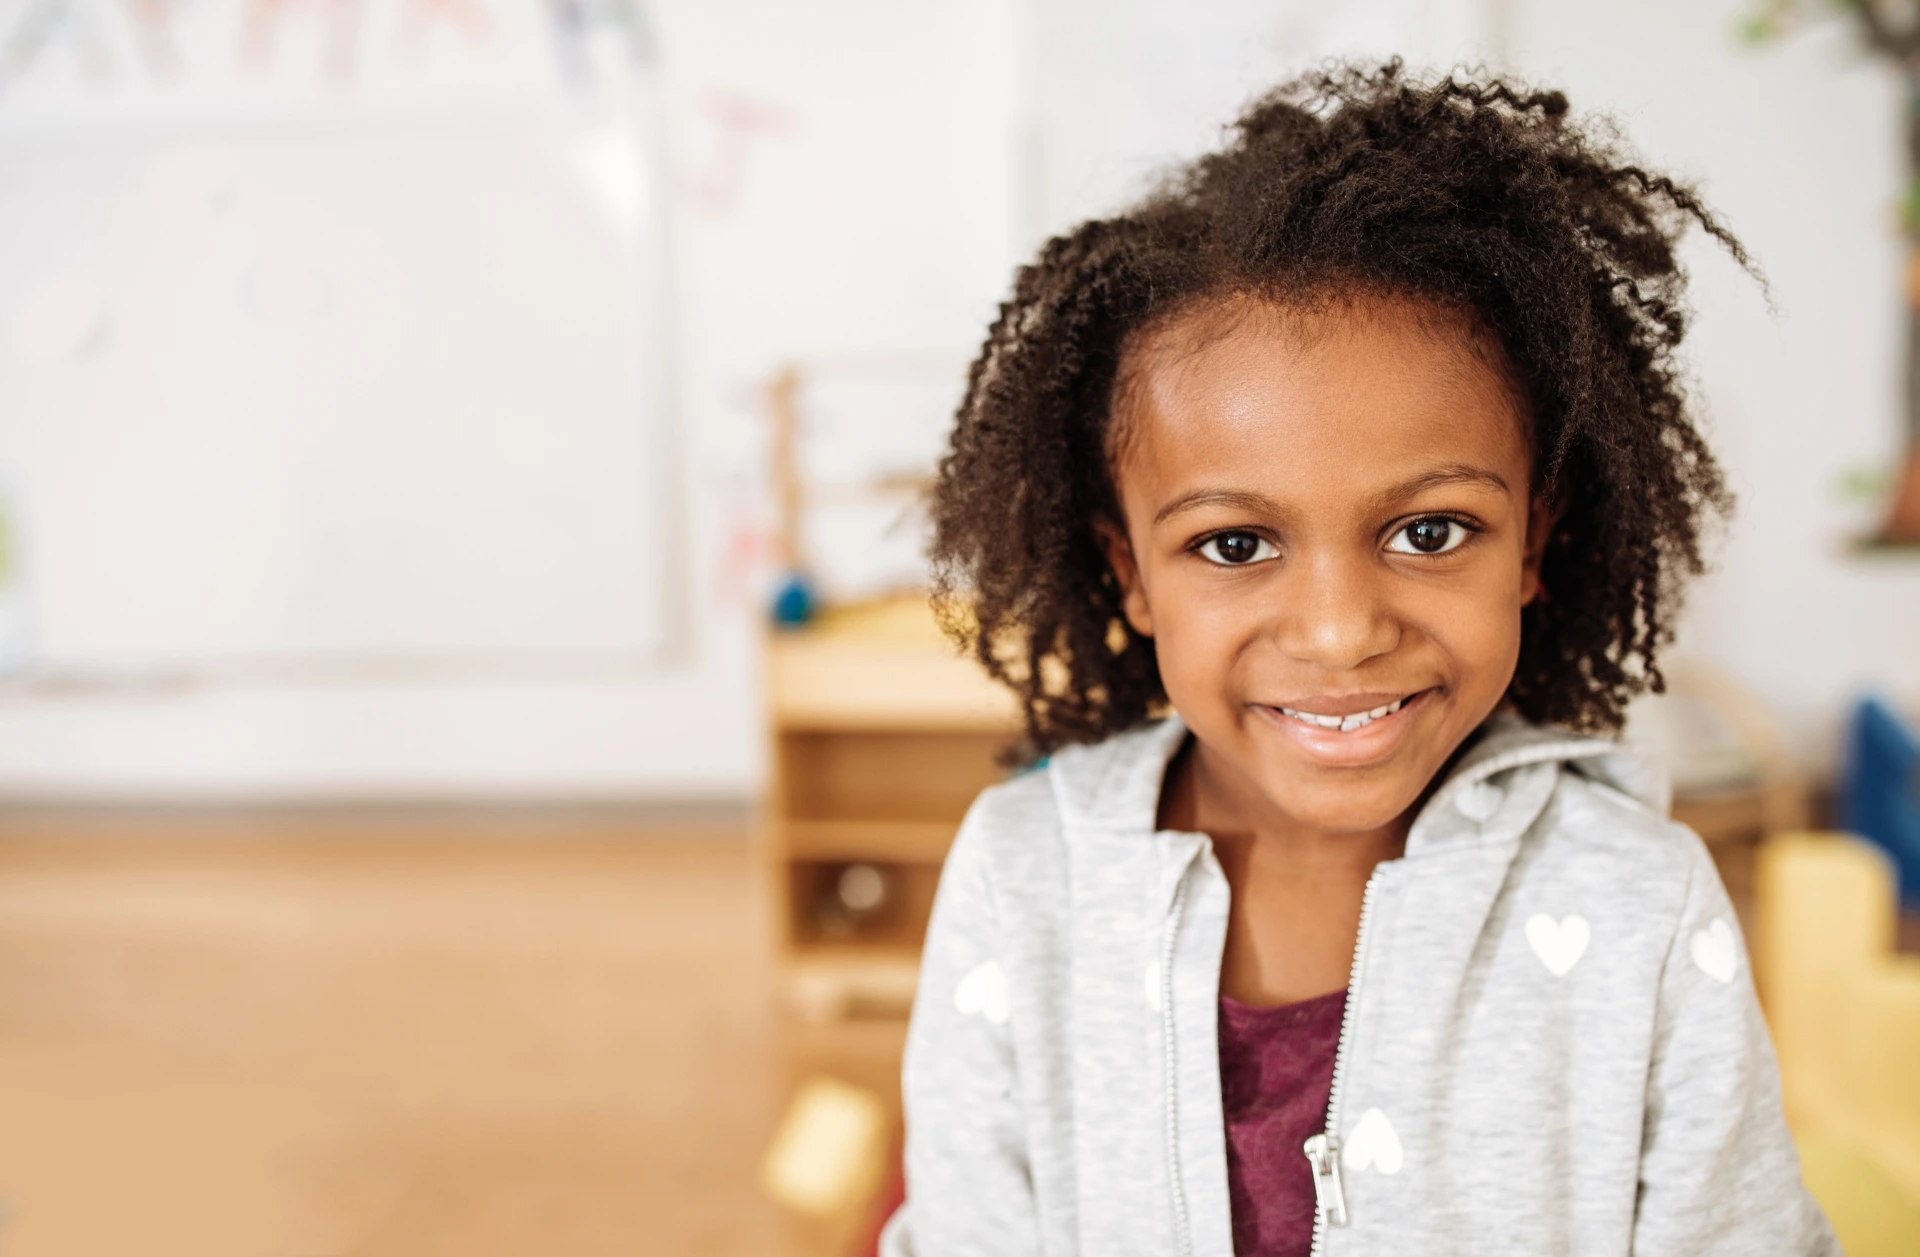 African American girl smiling in a preschool classroom.